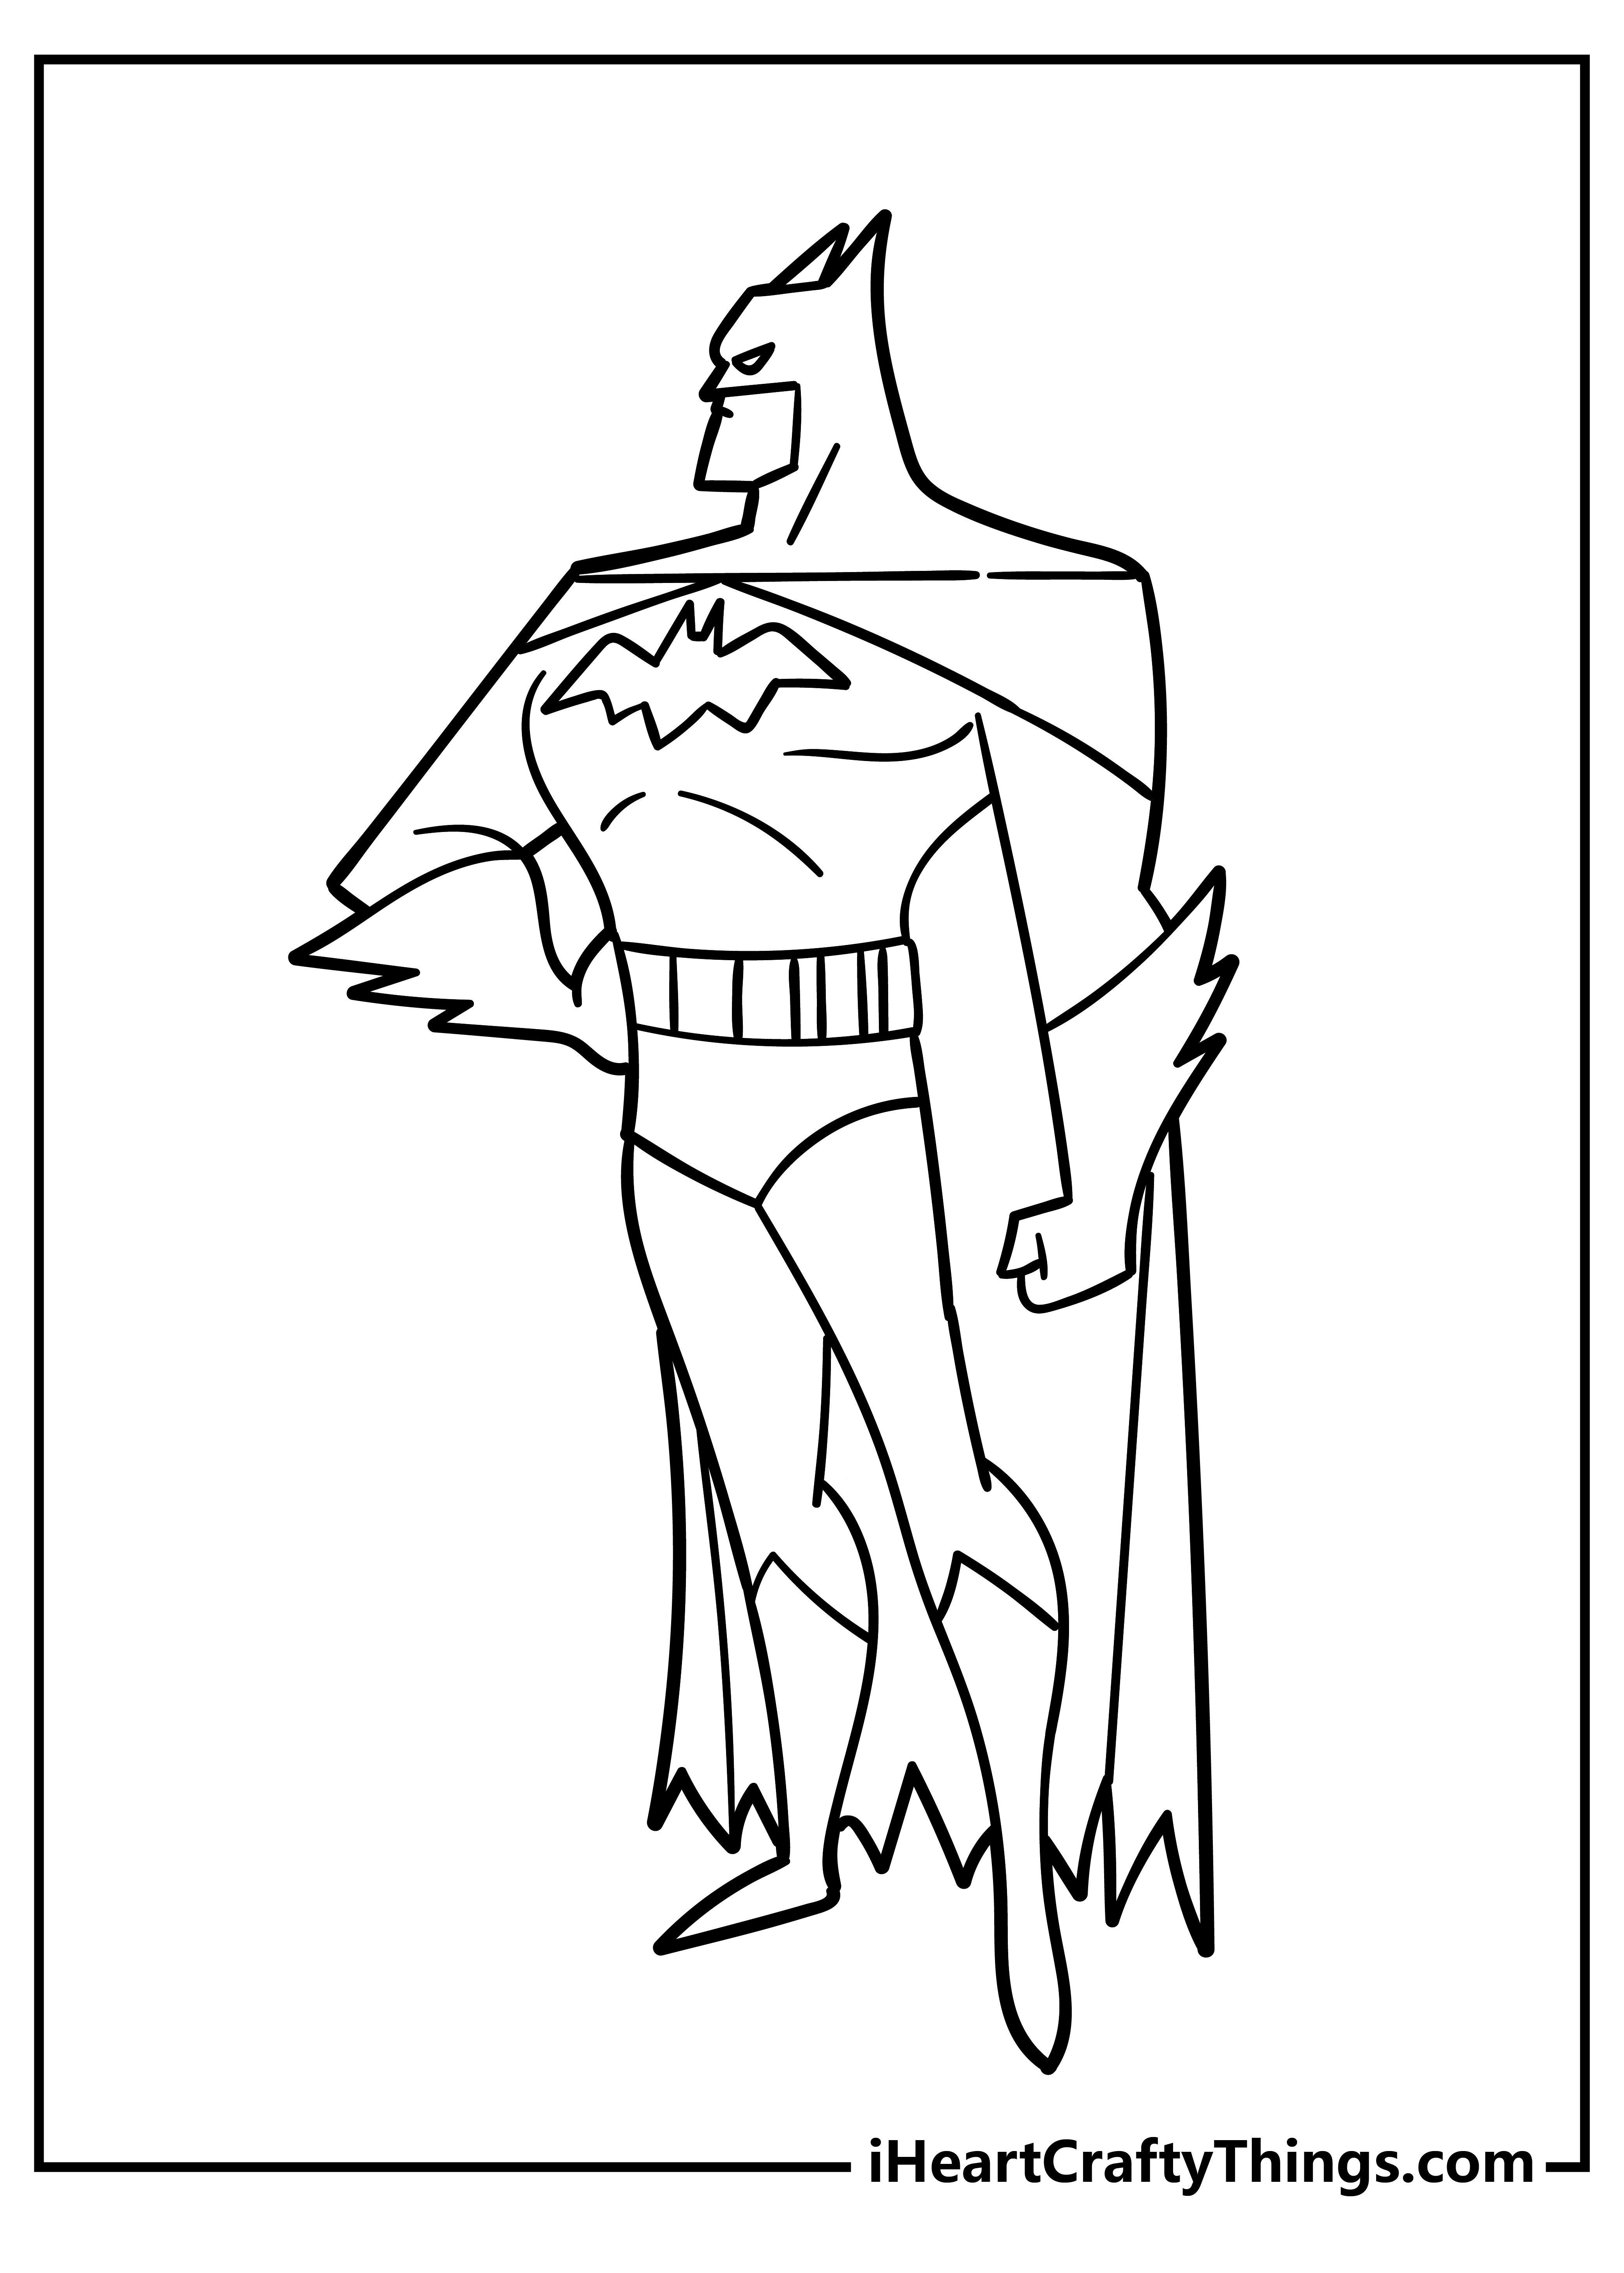 Batman Coloring Pages free printable